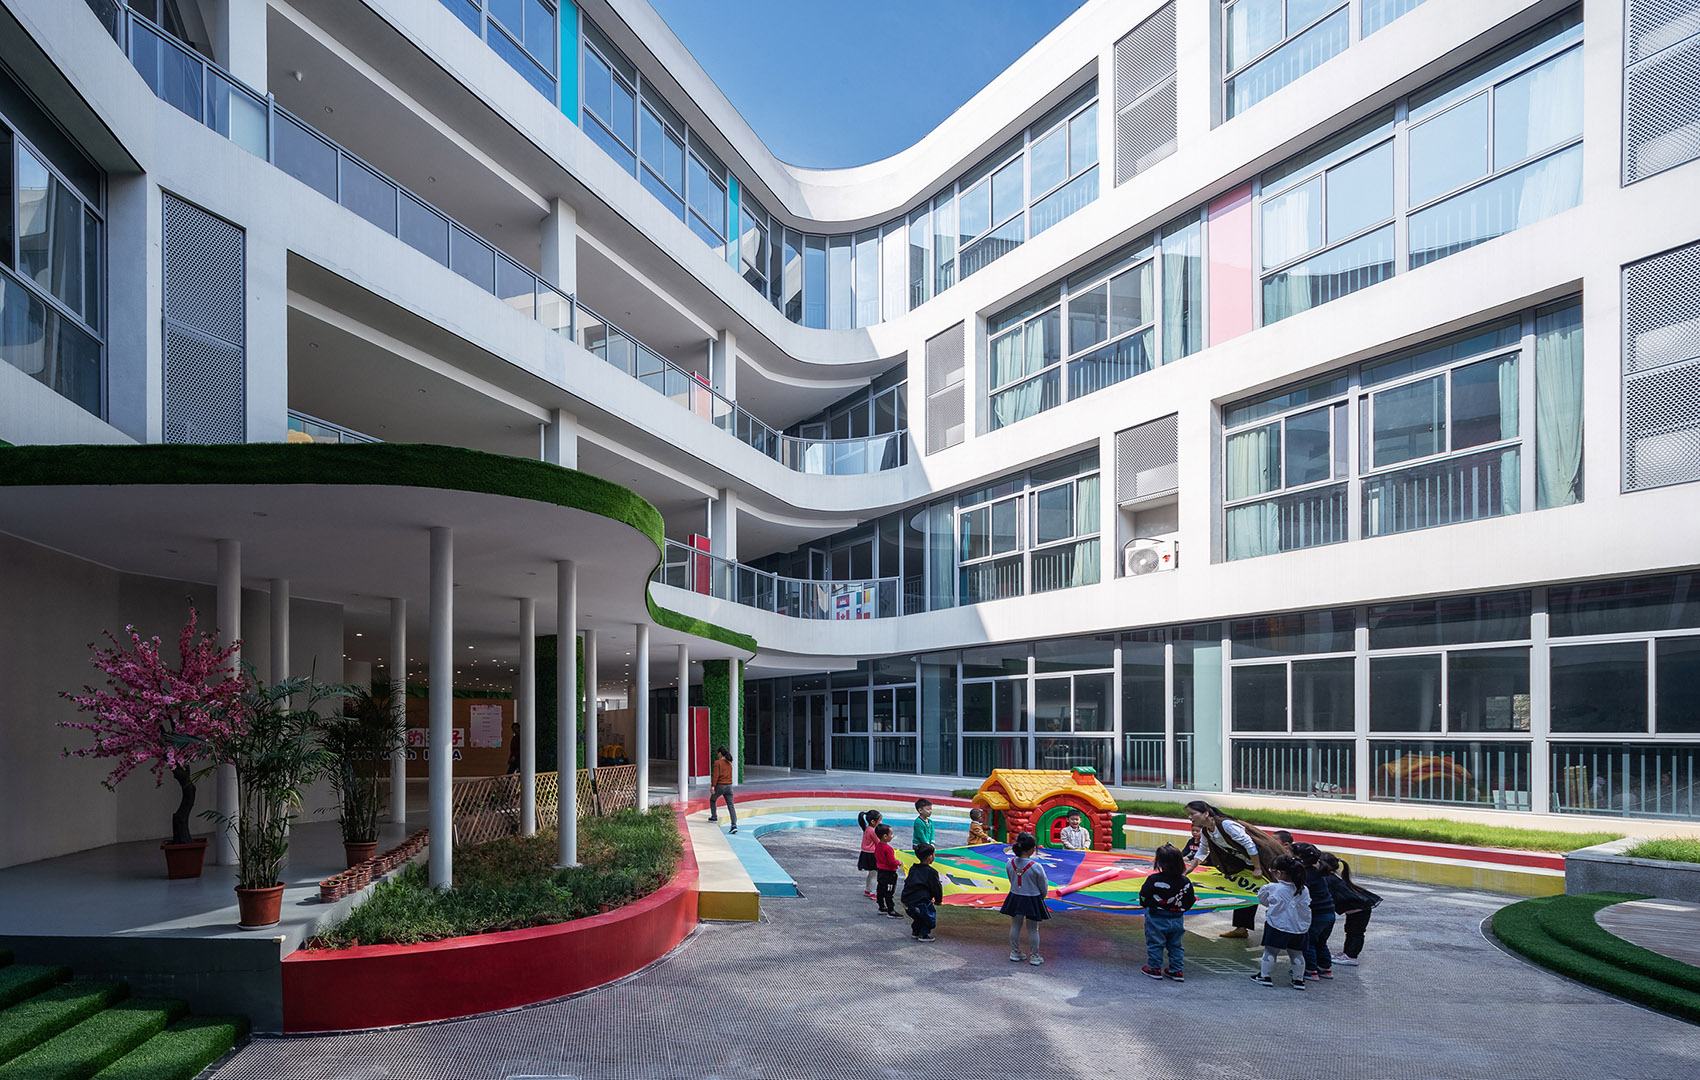 012-yy-terrace-school-ningbo-idea-kids-international-kindergarten-china-by-archgrid.jpg